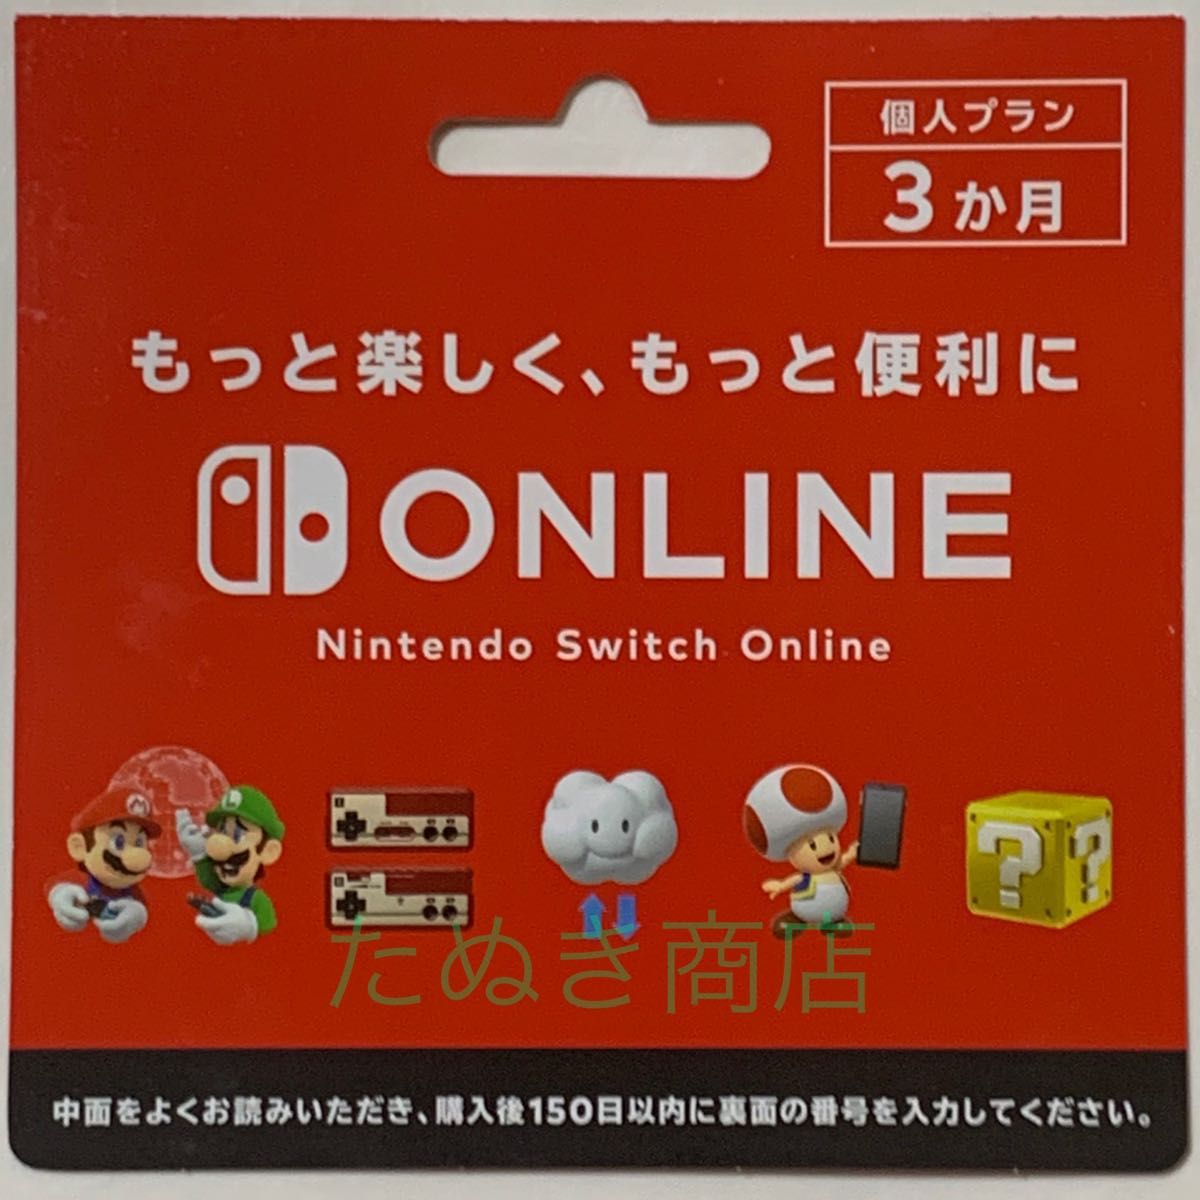 Nintendo Switchオンライン利用券 個人プラン3か月のダウンロードカード